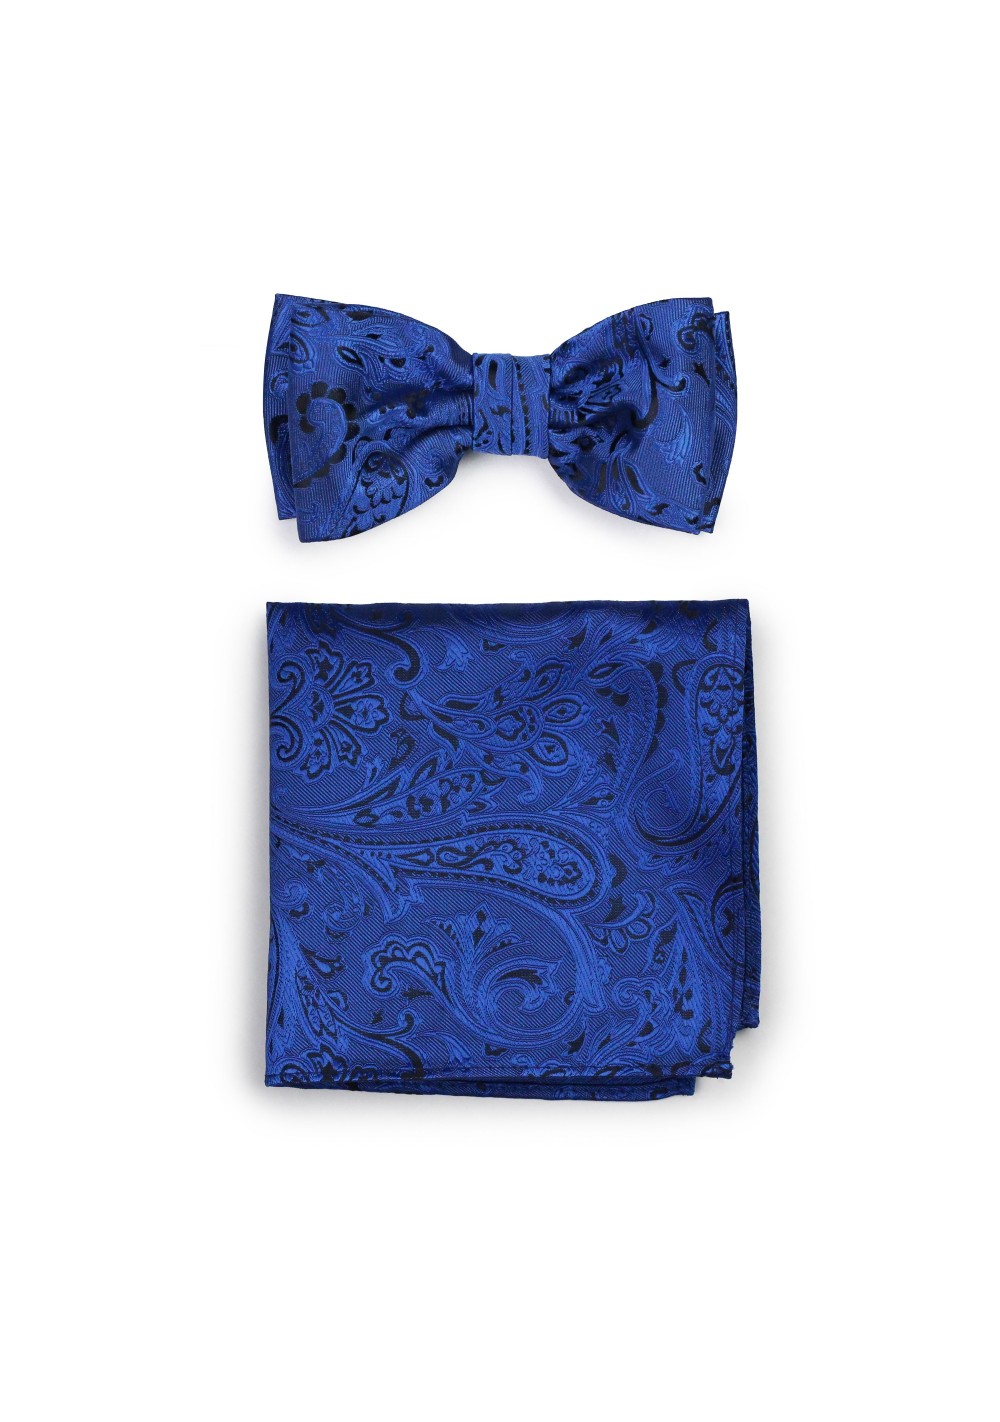 DQT Woven Floral Paisley Royal Blue Formal Handkerchief Hanky Pocket Square 